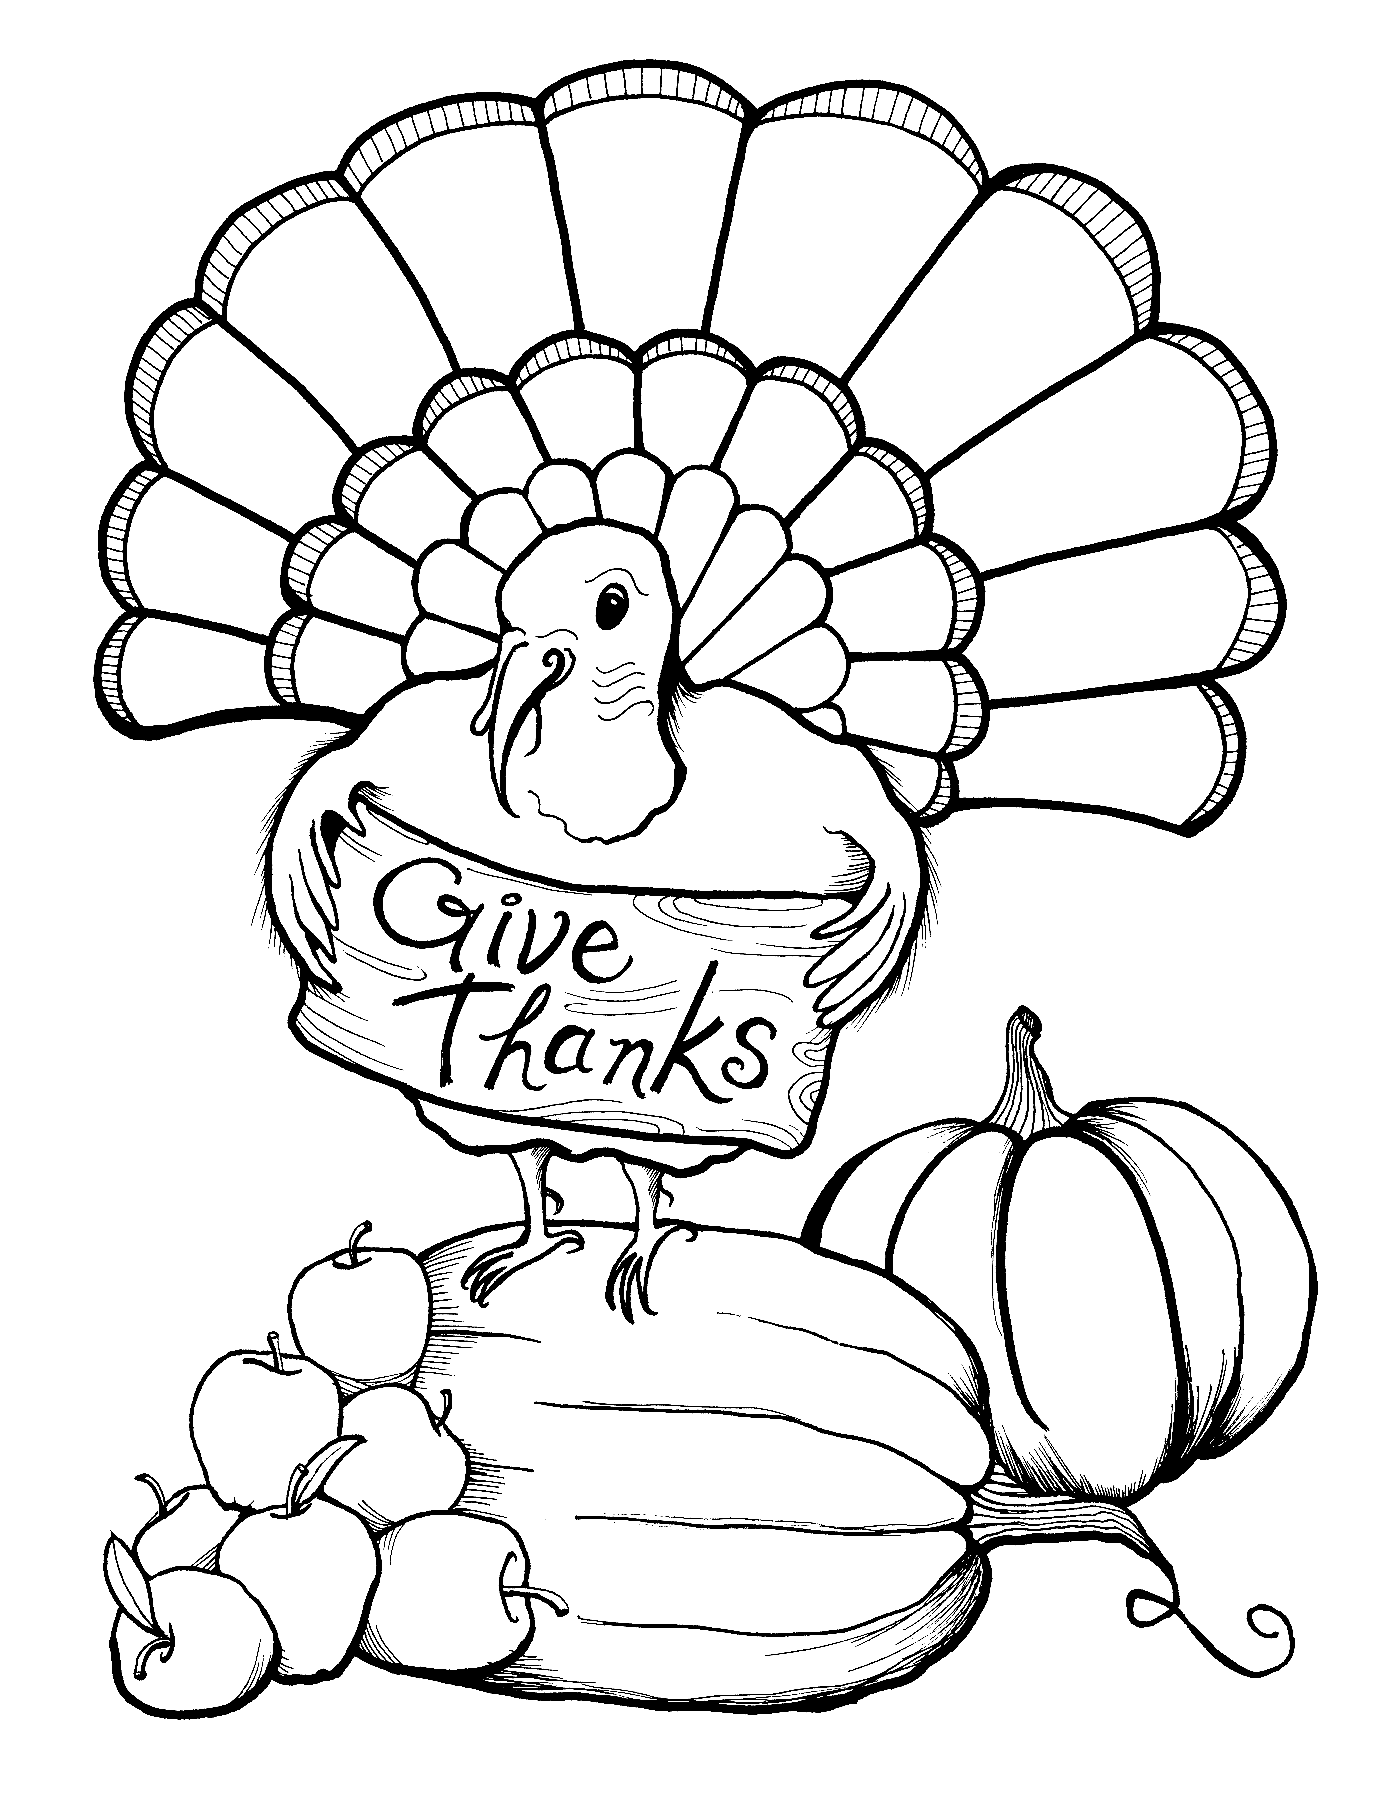 Give Thanks November Coloring Page